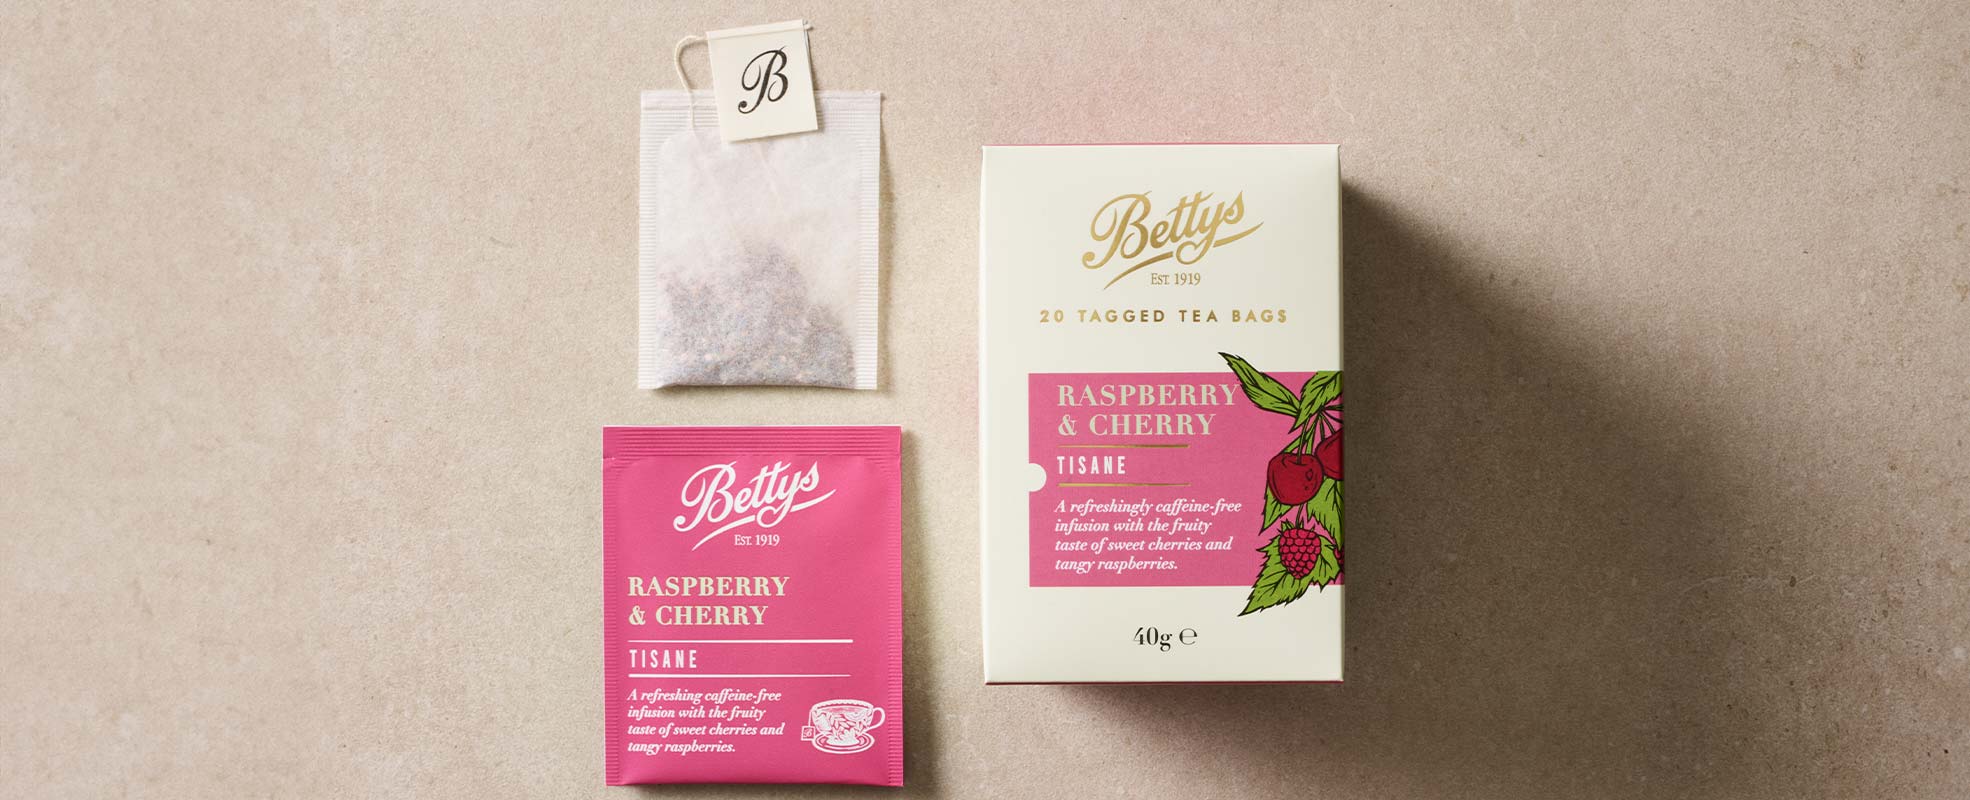 Bettys Tea Bags